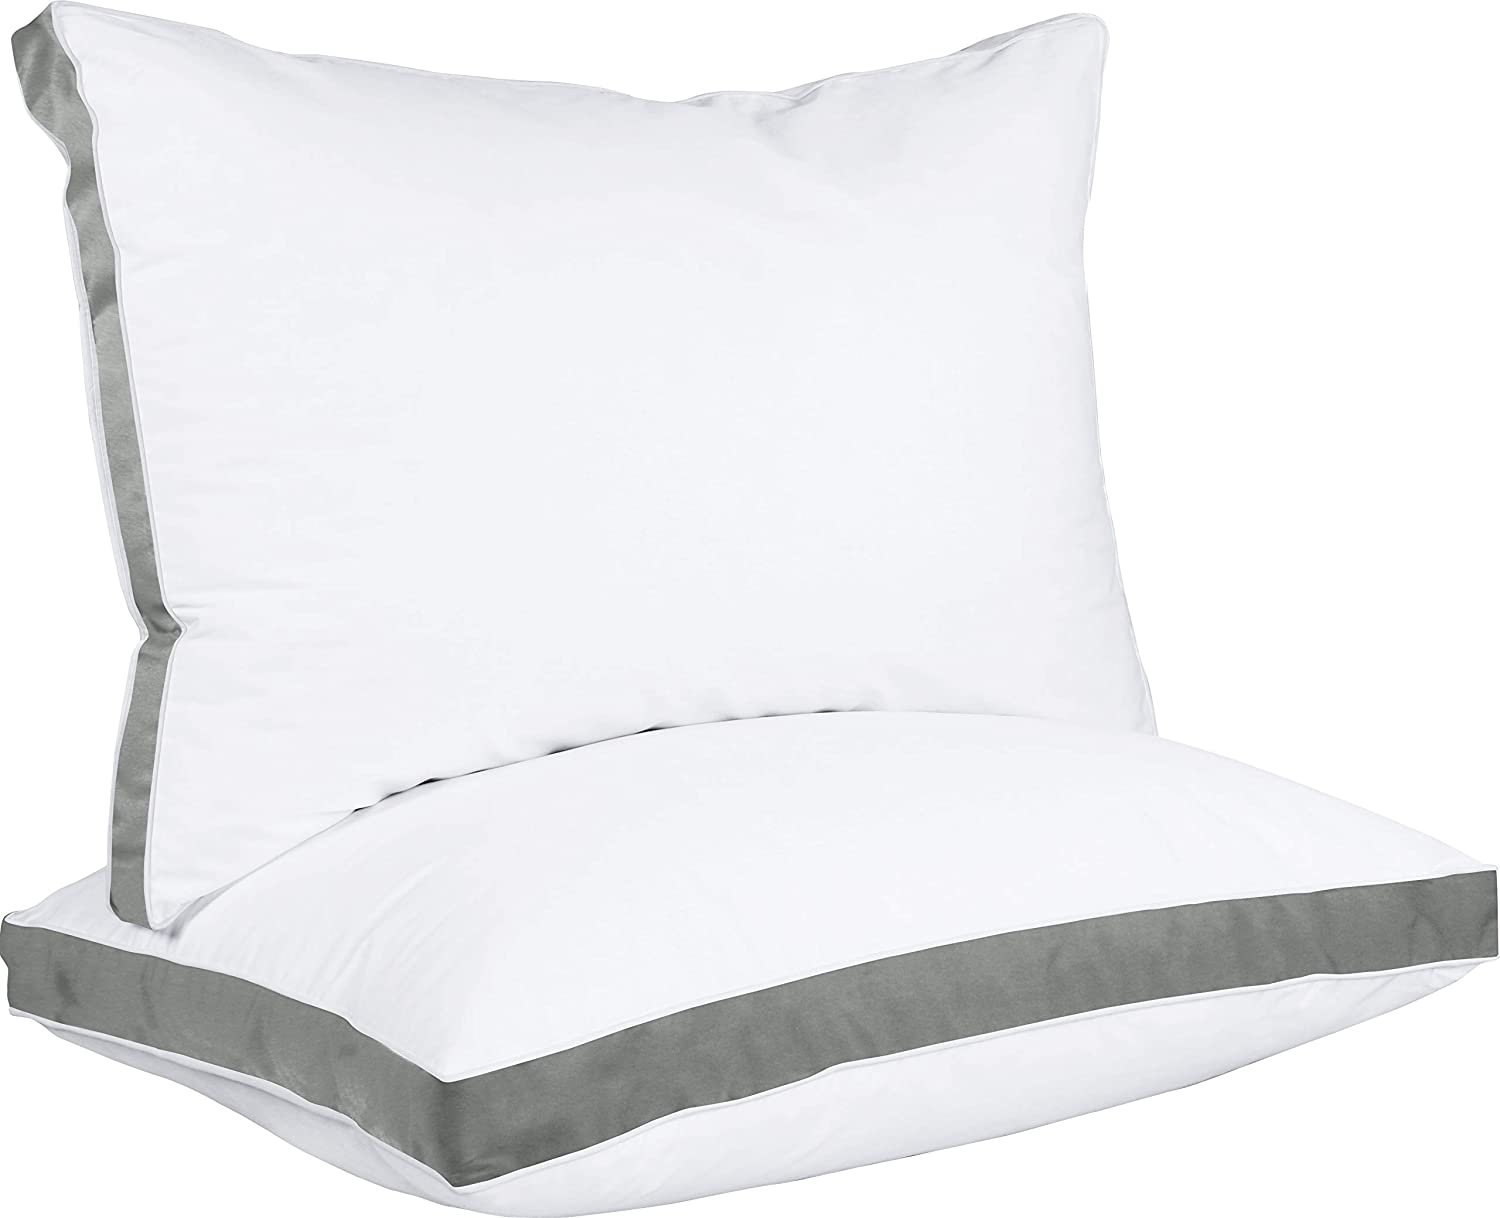 Utopia Bedding Fluffy Cotton Blend Pillows, 2-Pack